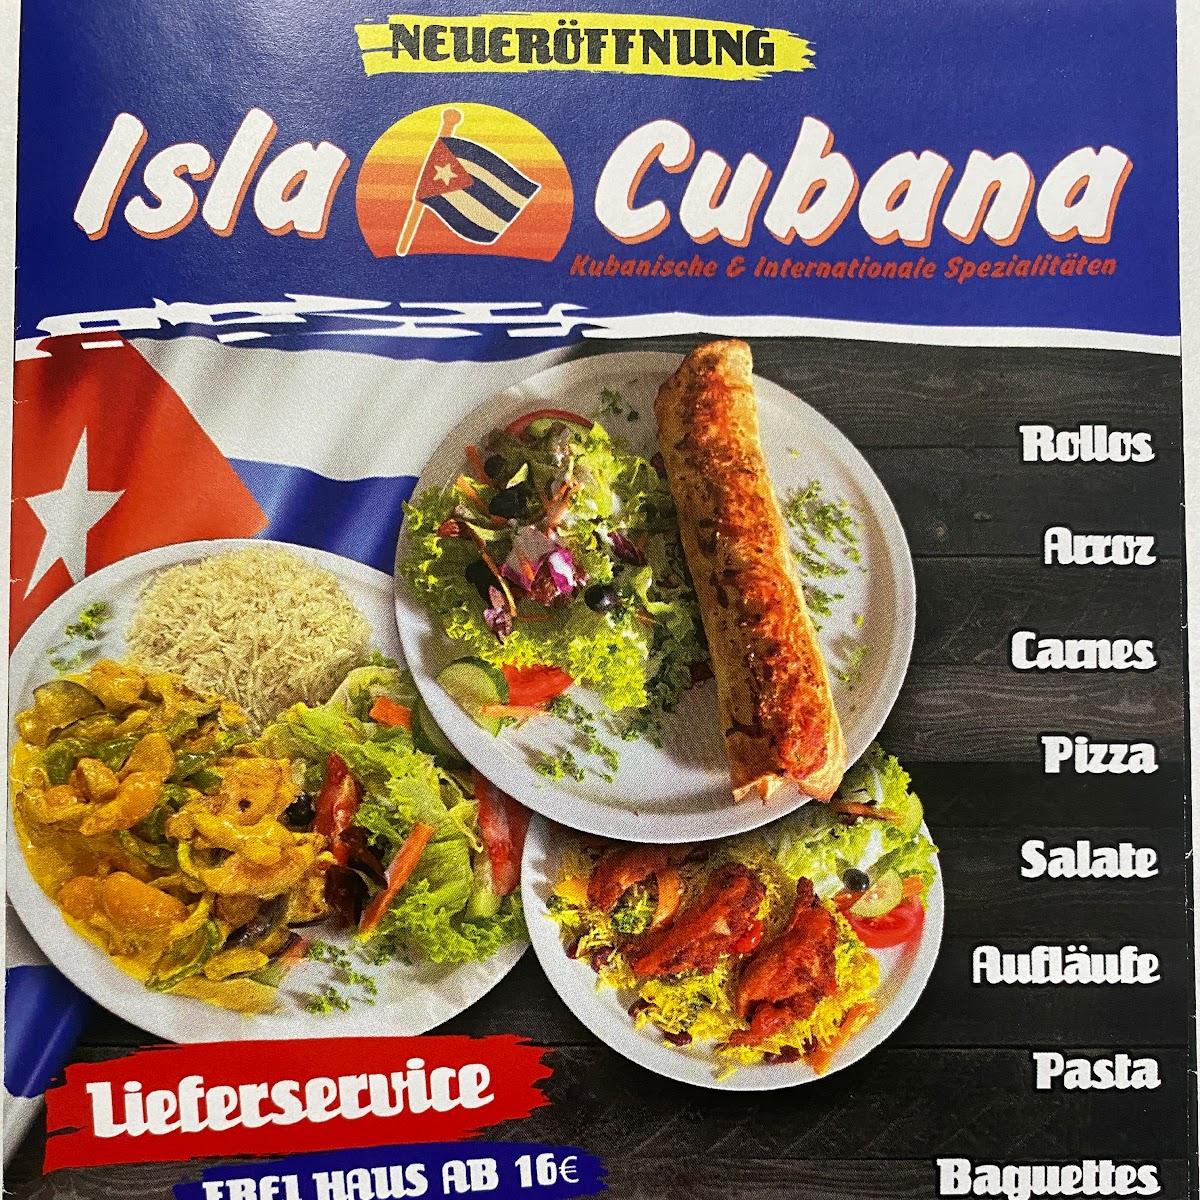 Restaurant "Isla Cubana" in Aachen